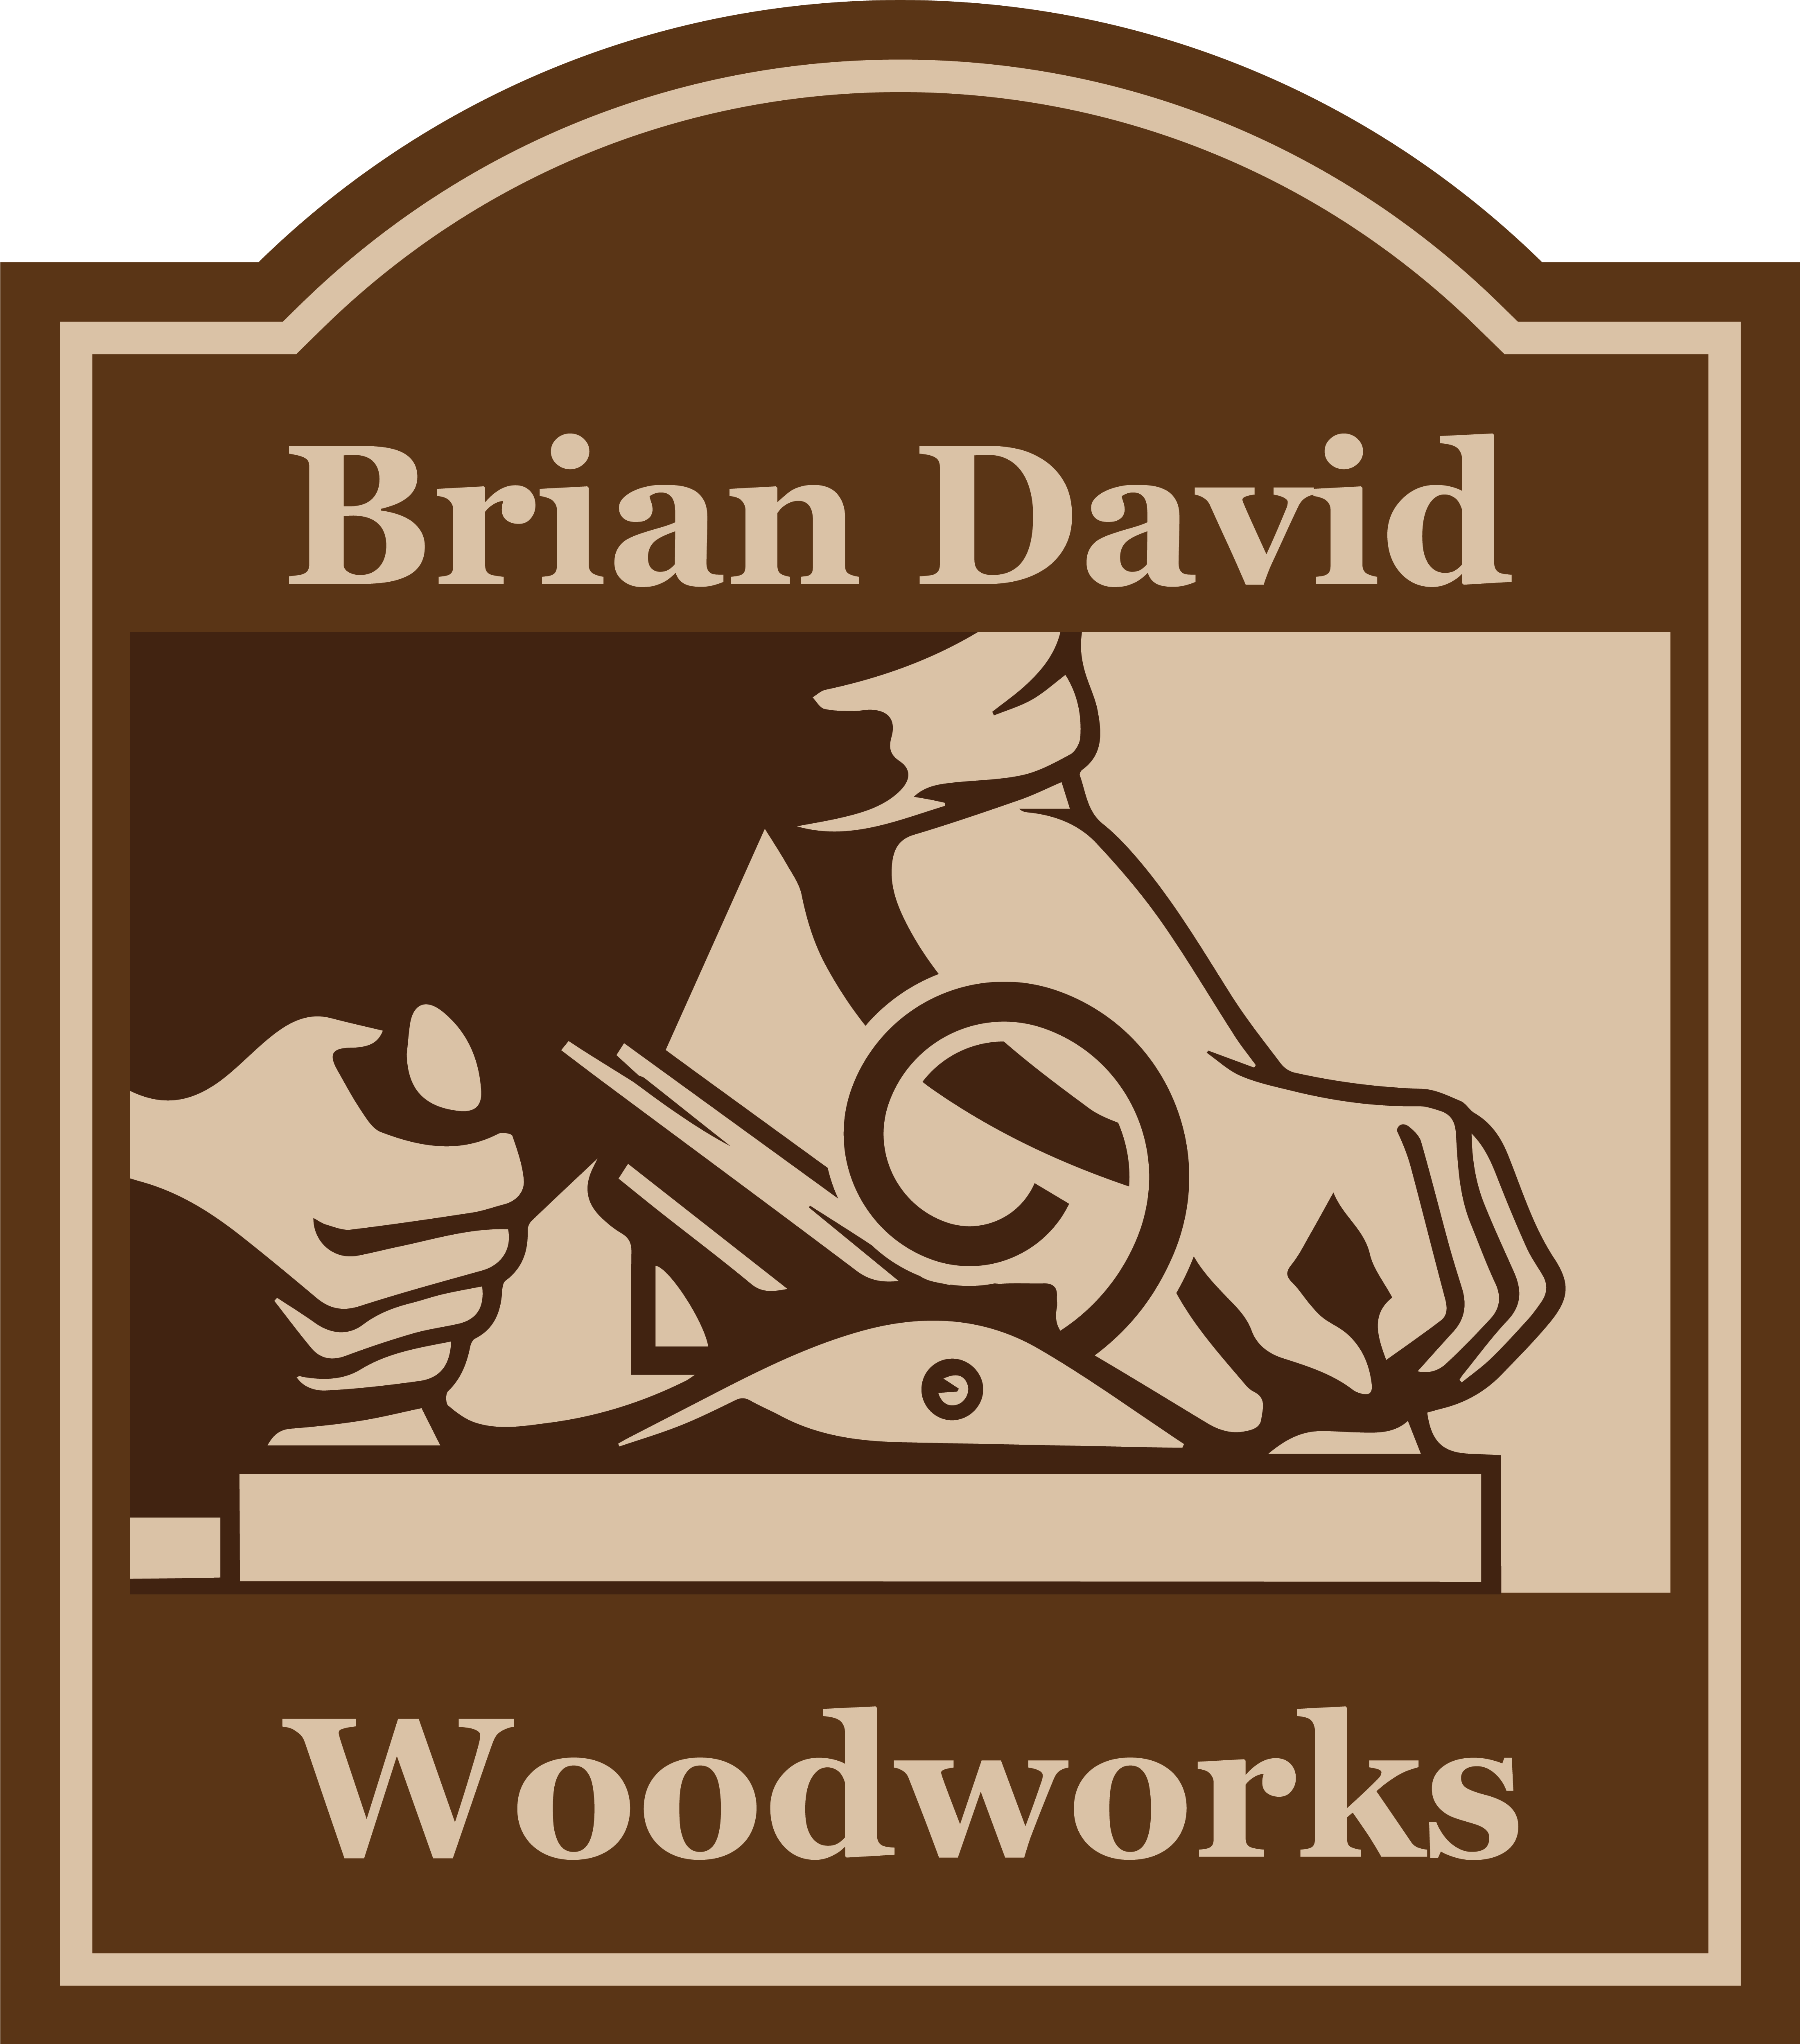 Brian David Woodworks